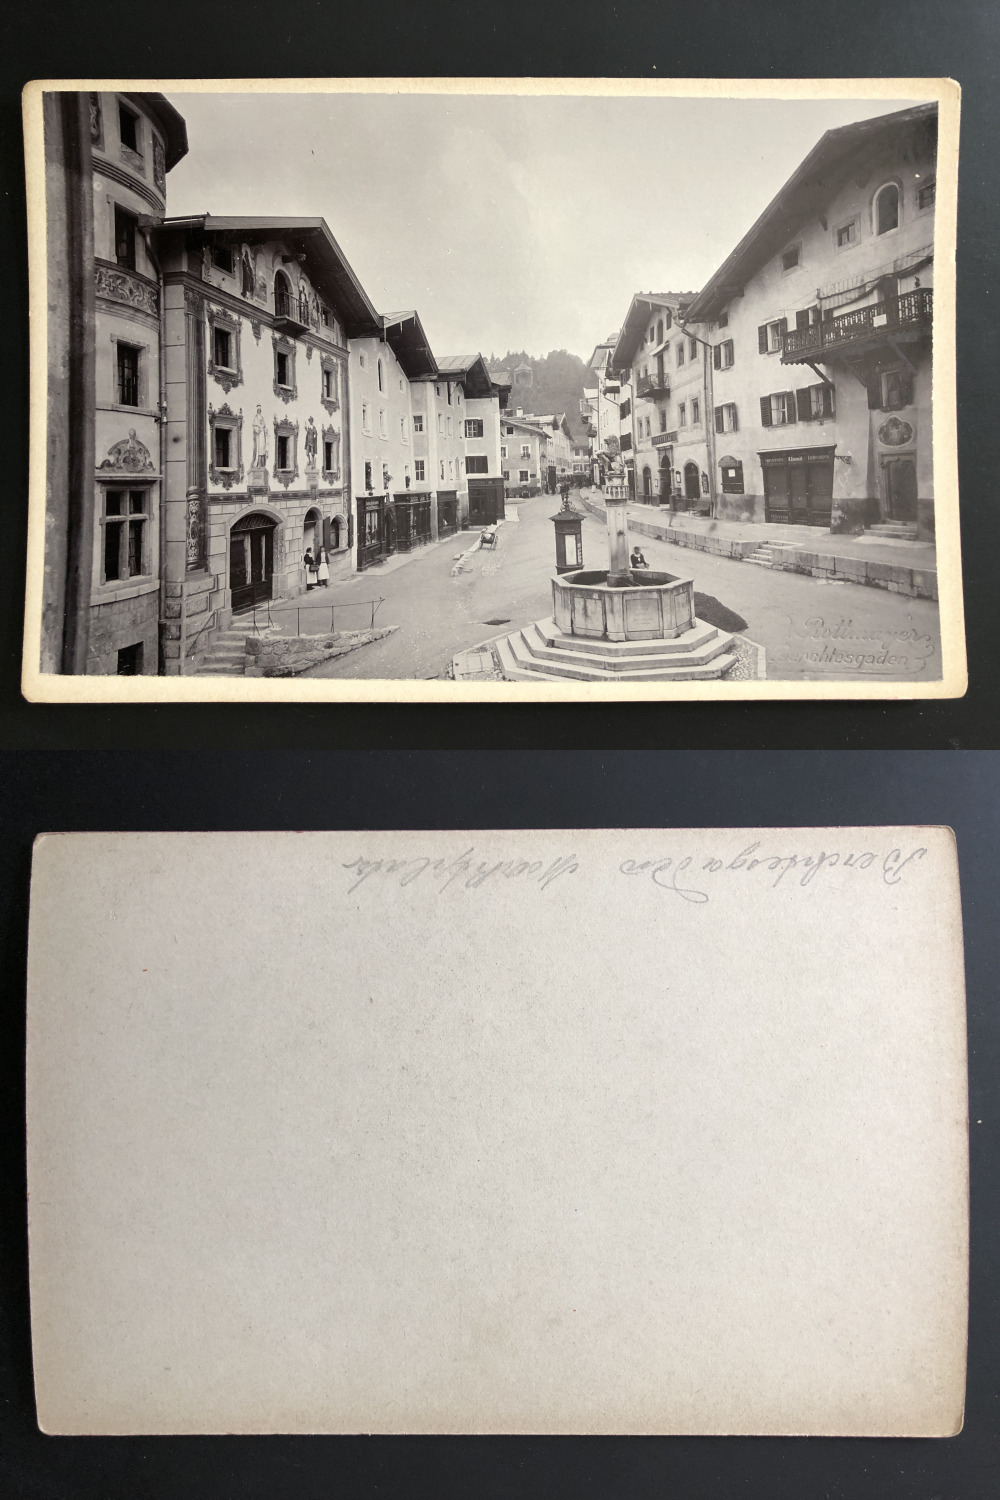 Rottmayer, Germany, Berchtesgaden, marketplace vintage silver print, map ca